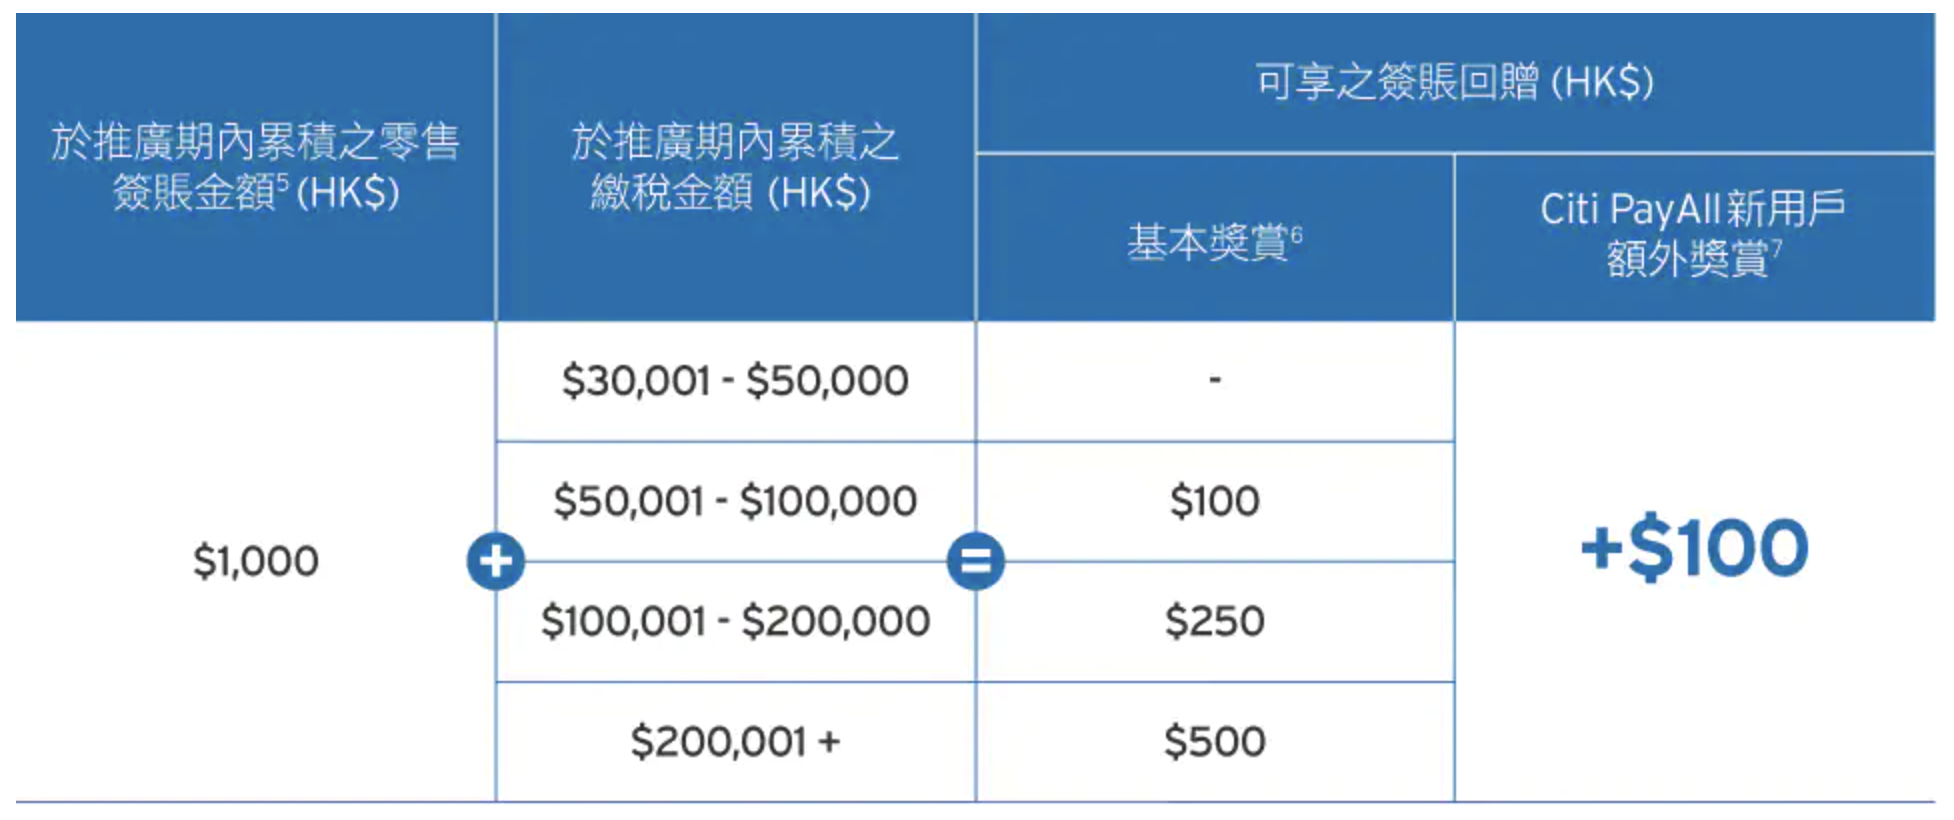 Citi PayAll︱交稅必睇！可賺高達HK$600簽賬回贈！另有繳費獎賞 HK$1 = 1里 可賺高達15,000里！